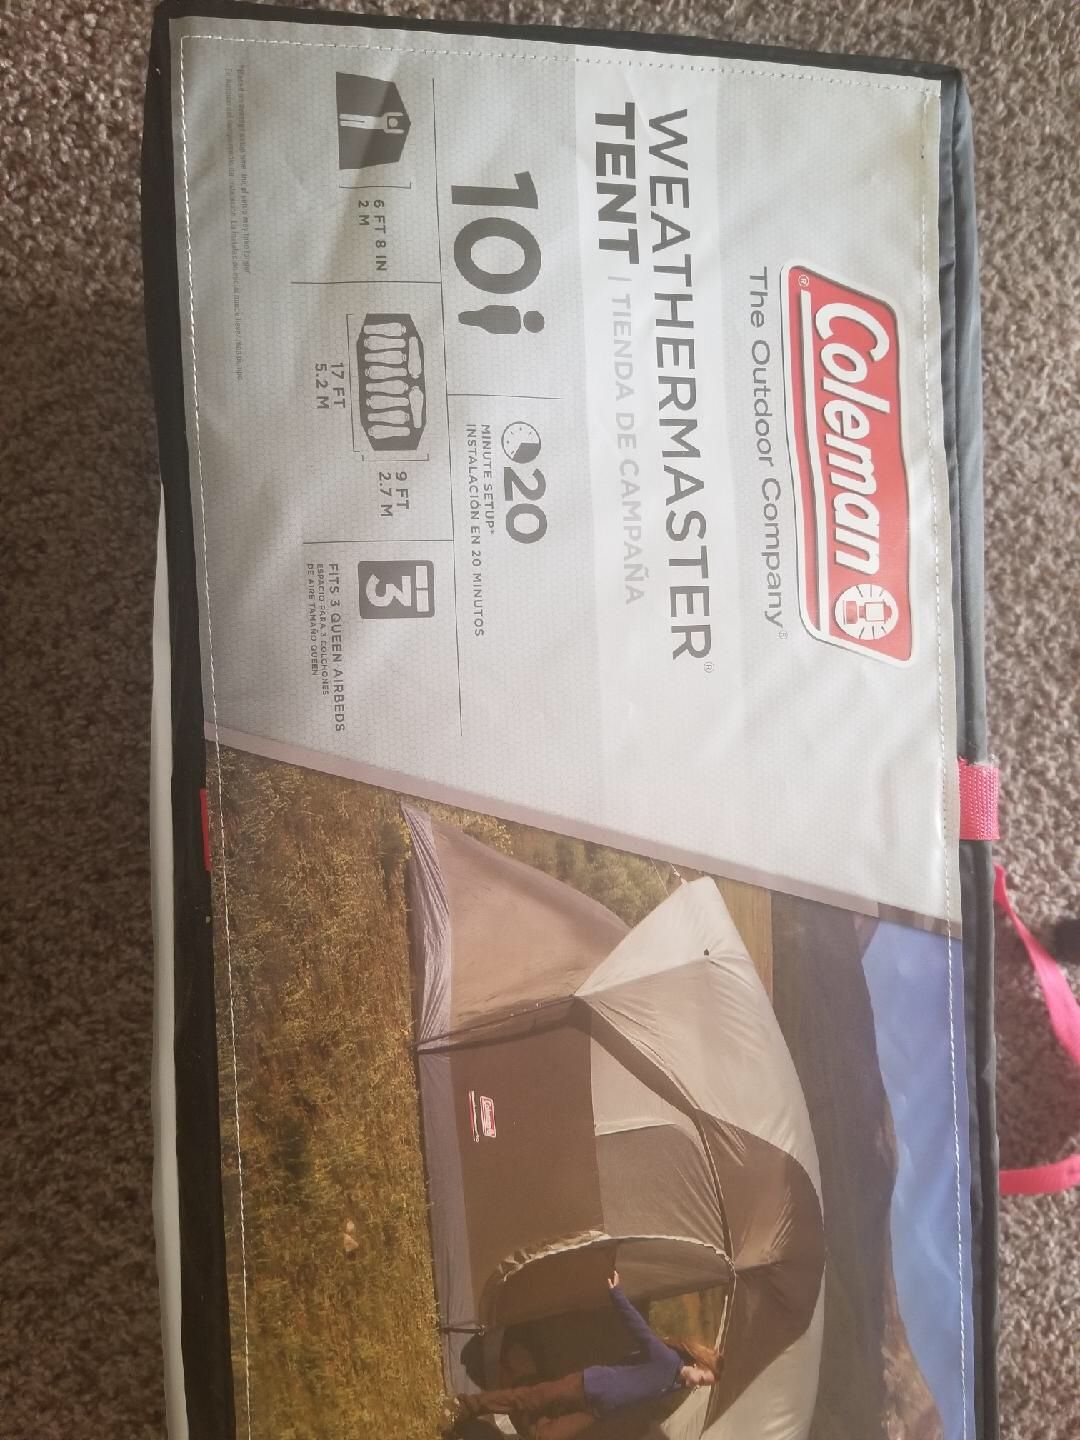 Brand new Coleman tent